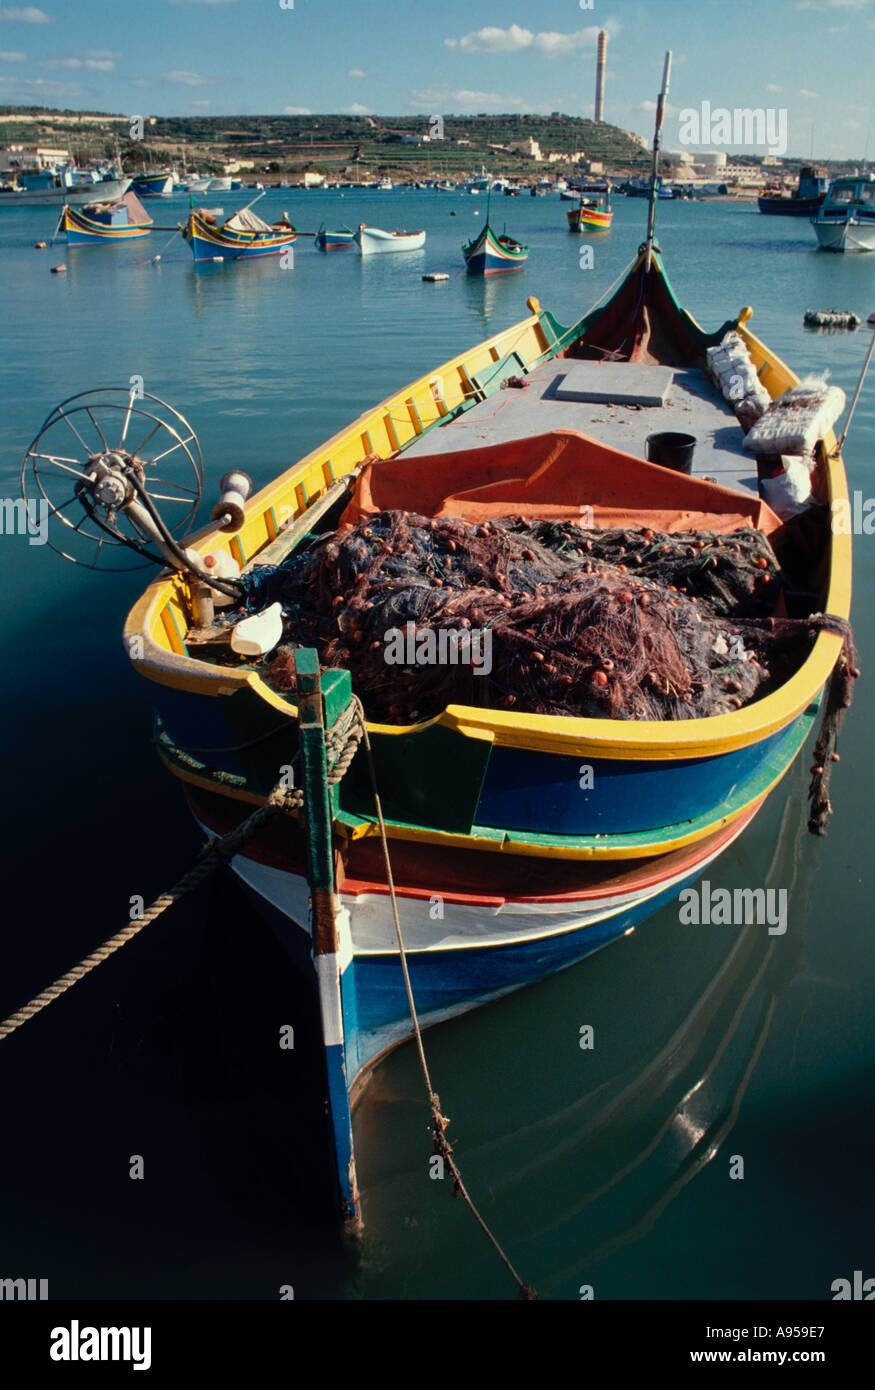 A luzzu inshore fishing vessel at Marsaxlokk harbour Malta Maltese Island Mediterranean Sea Europe Stock Photo